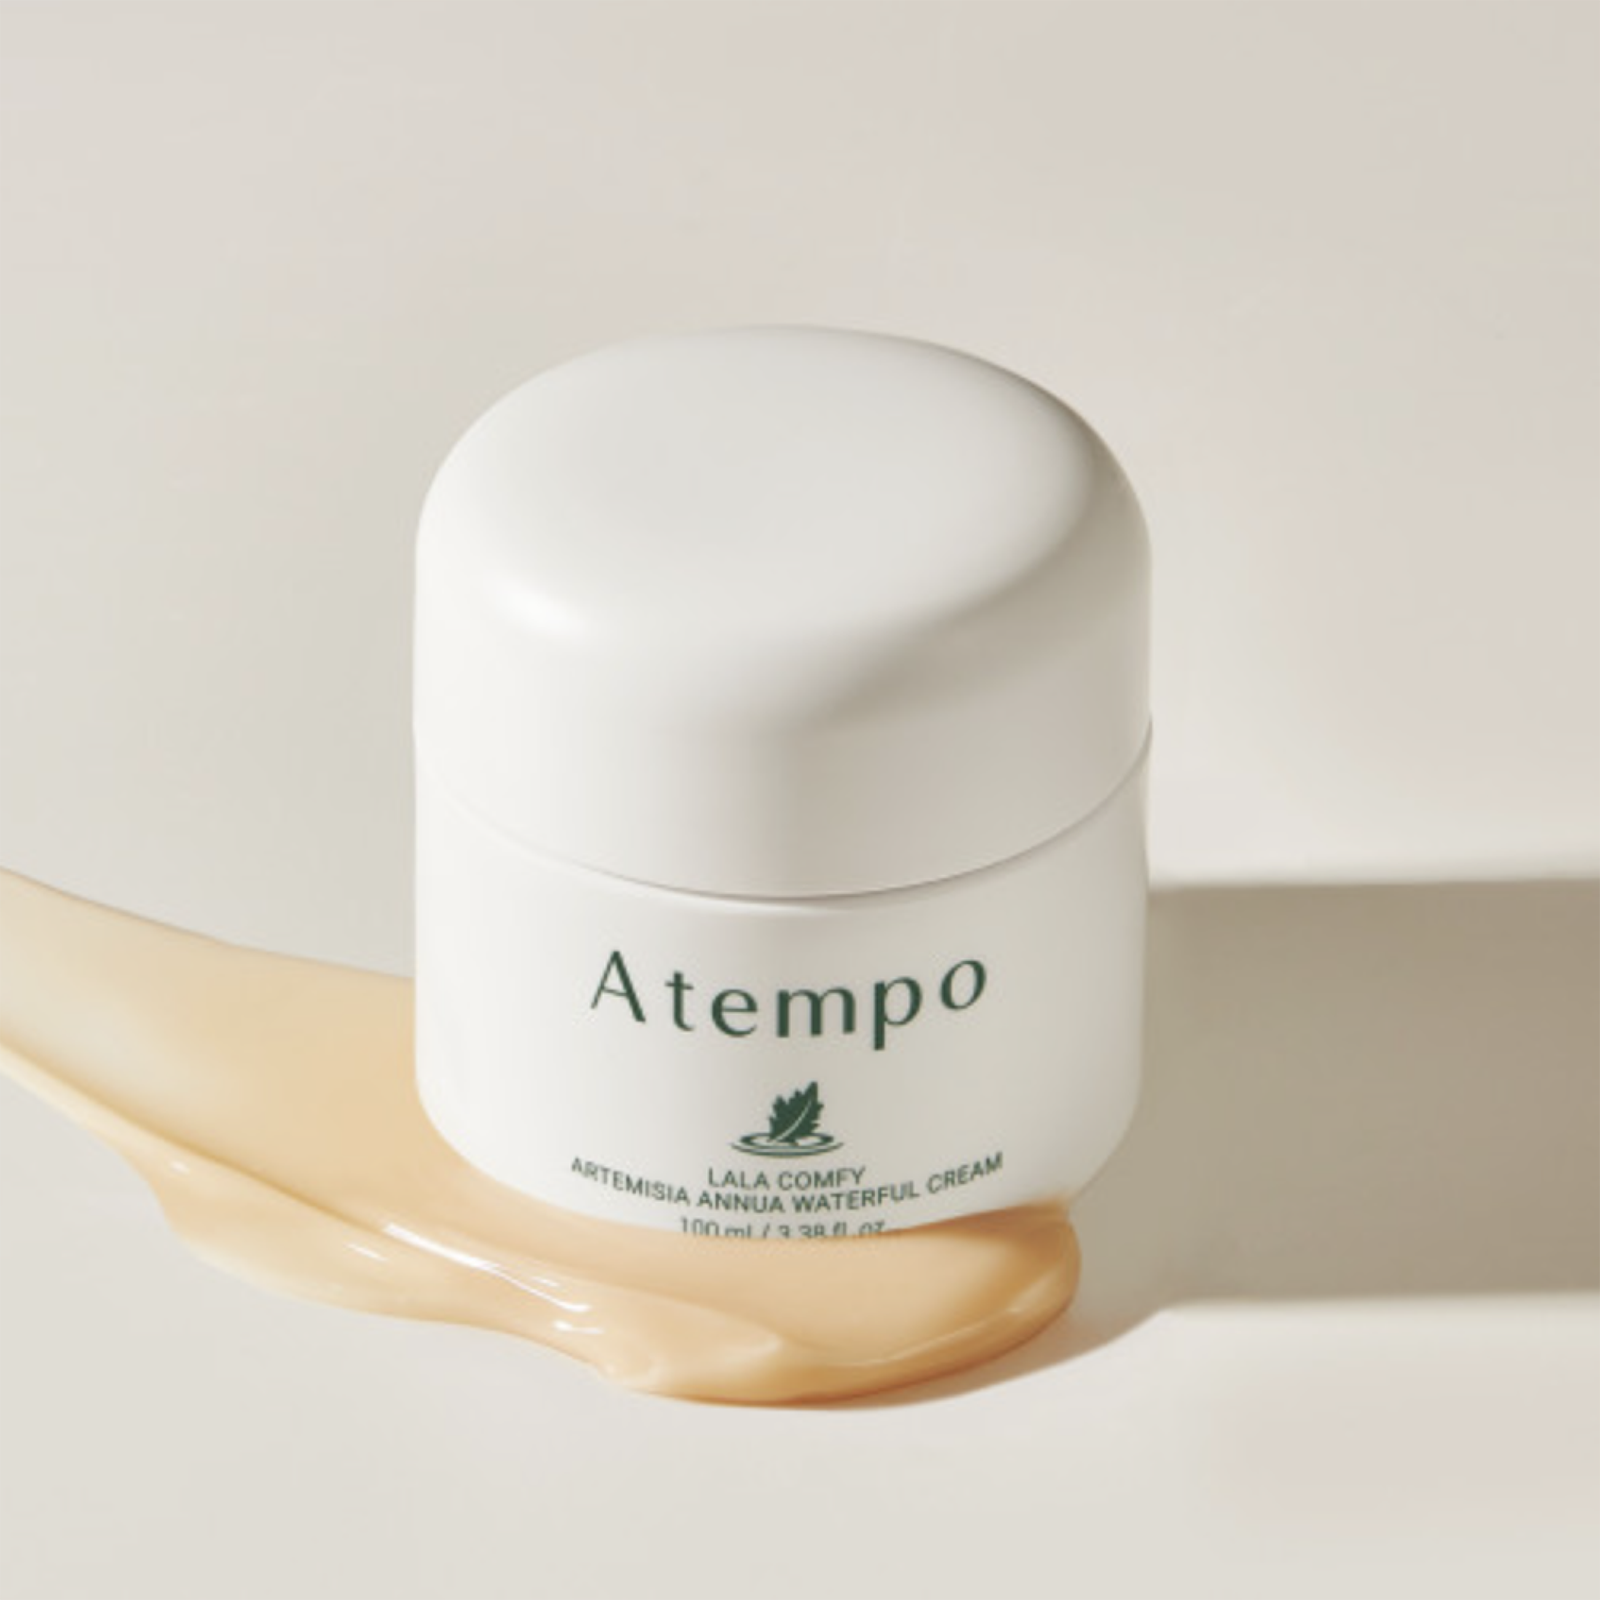 ATEMPO Lala Comfy Artemisia Annua Waterful Cream